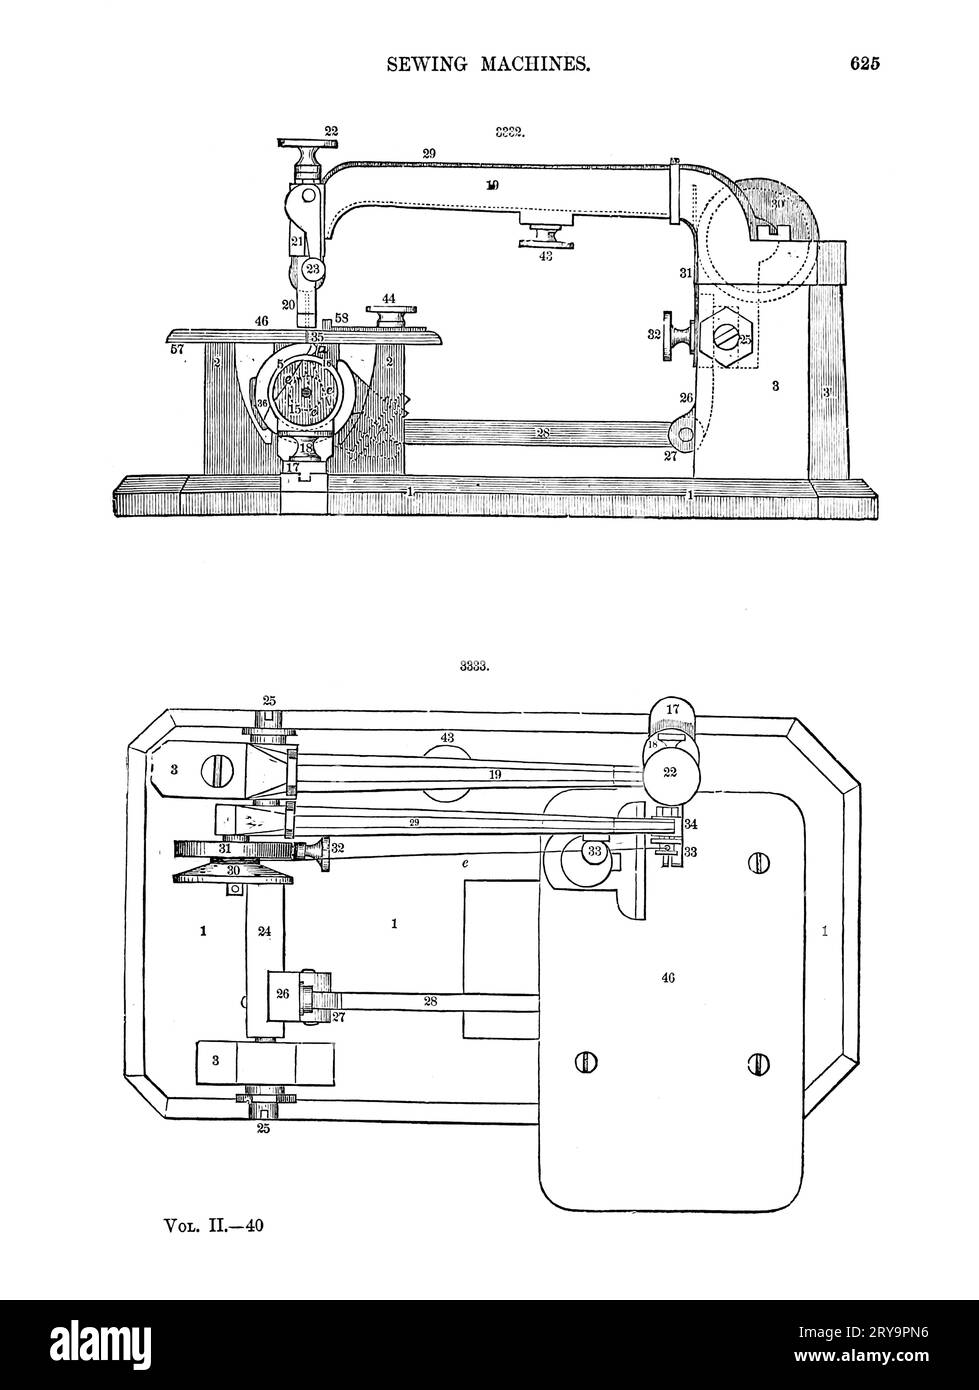 Sewing machine blueprint, illustration Stock Photo